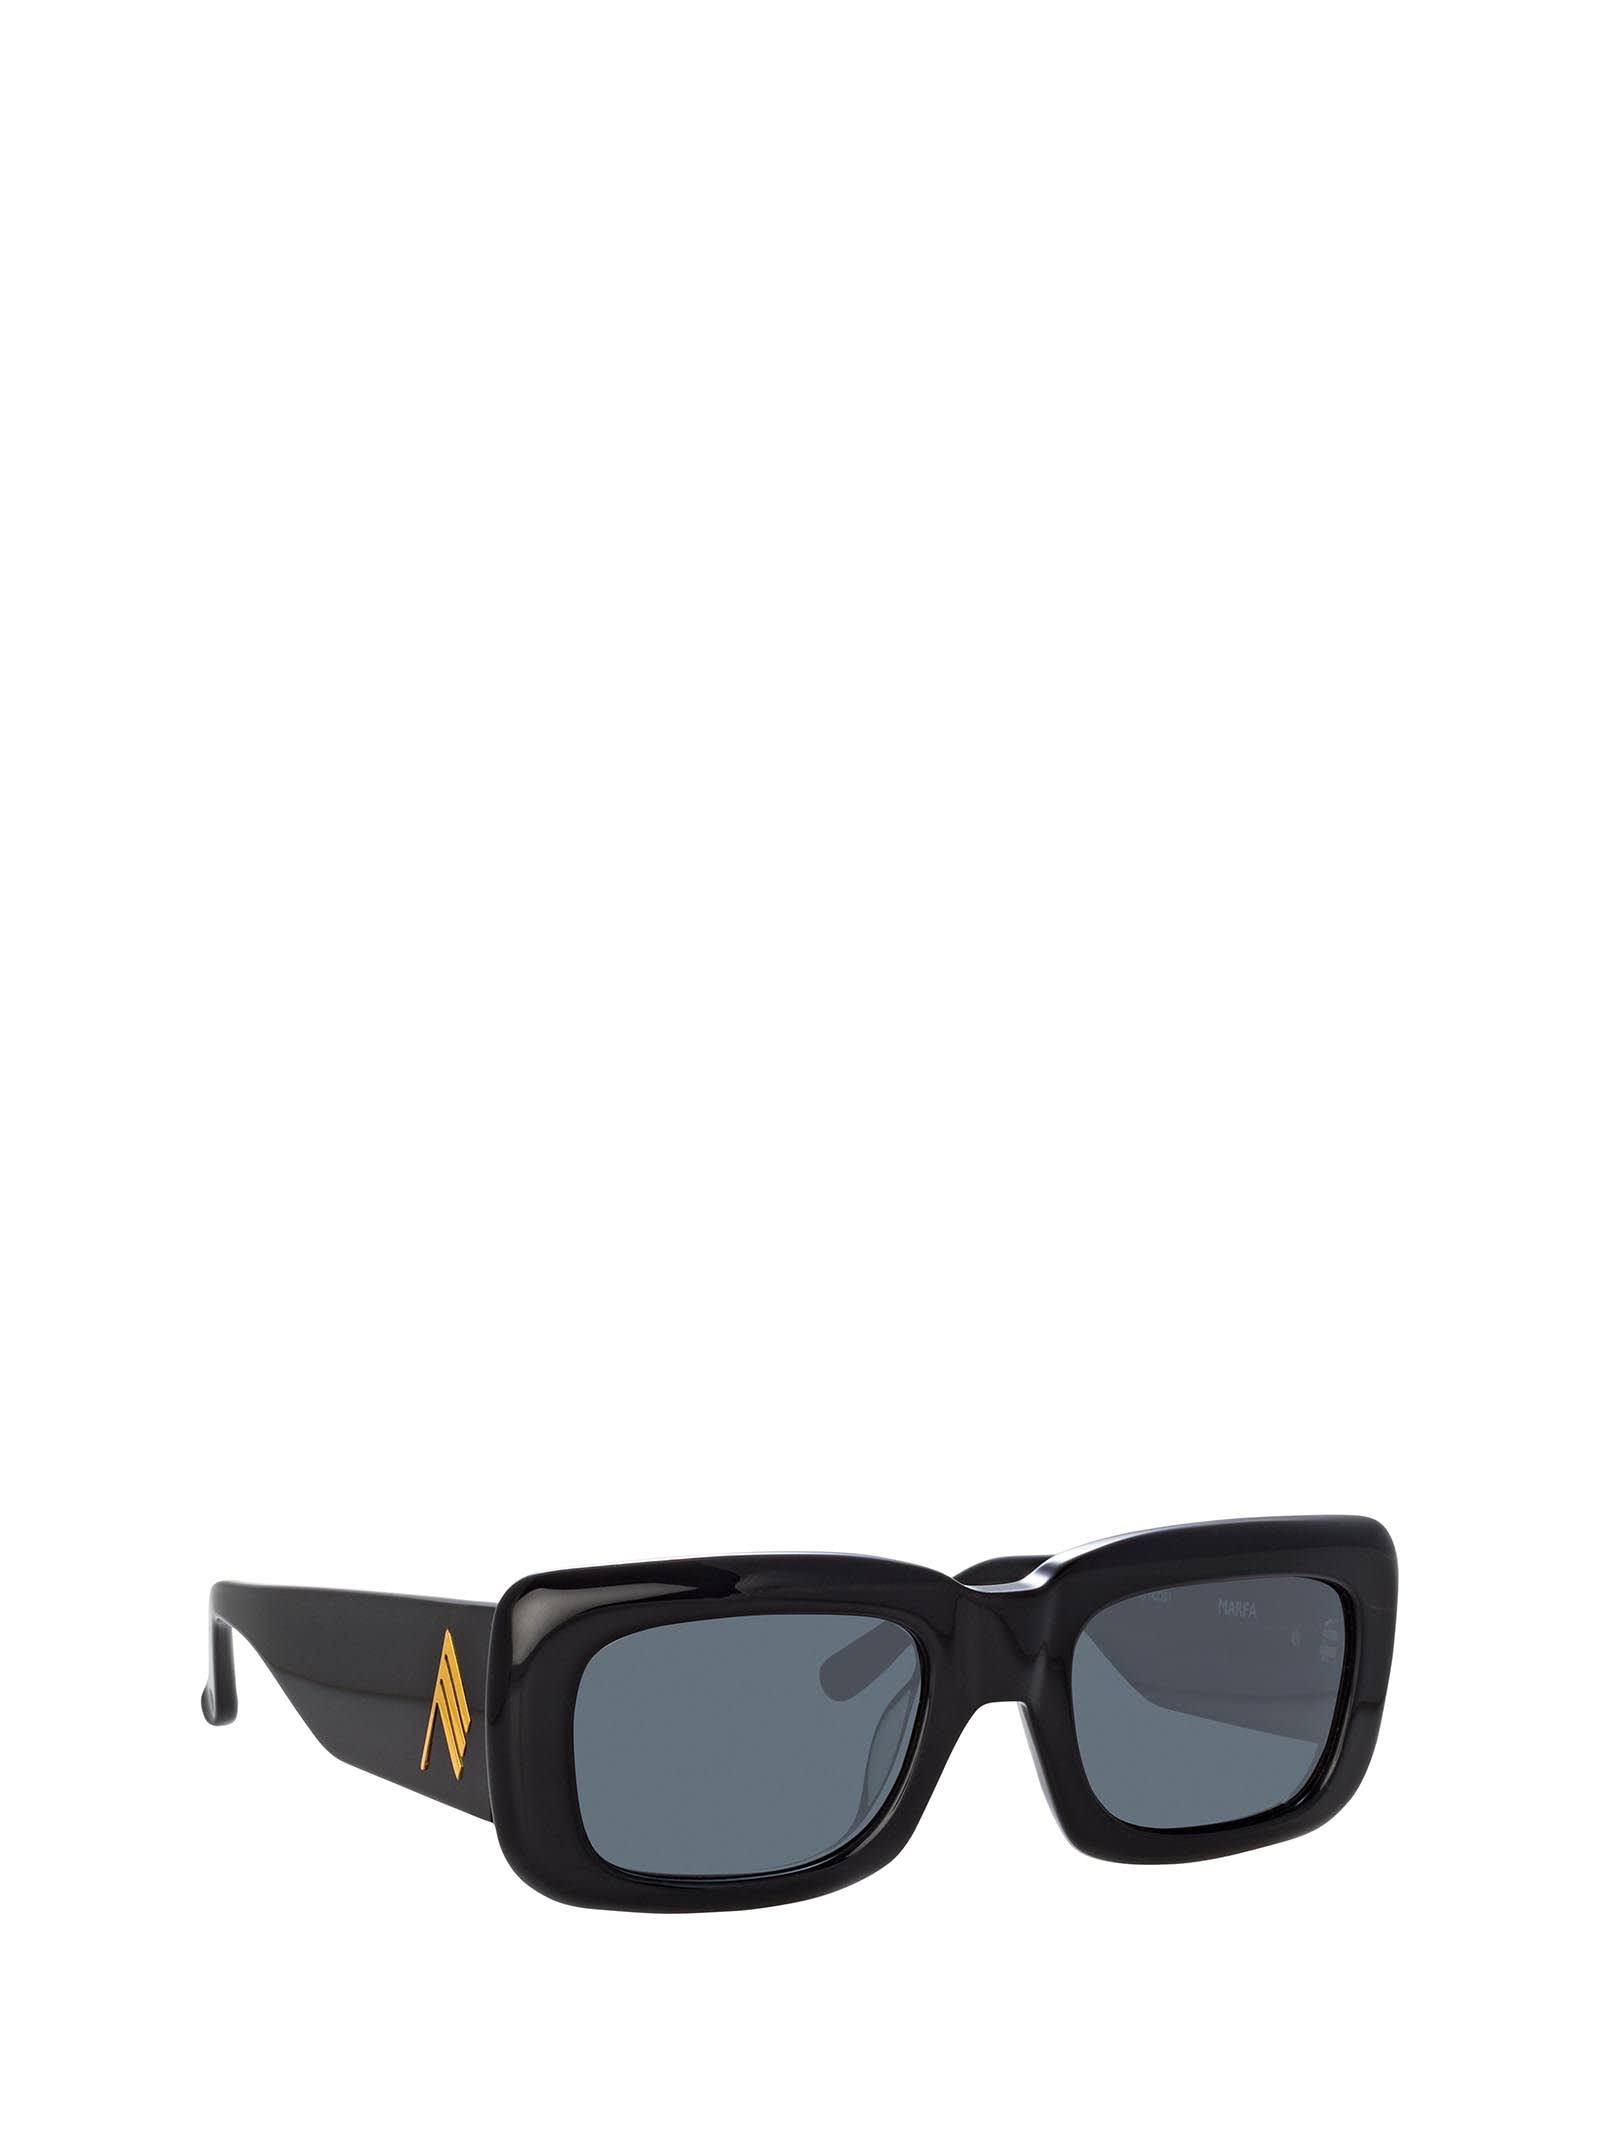 Shop Linda Farrow Attico3 Black / Yellow Gold Sunglasses